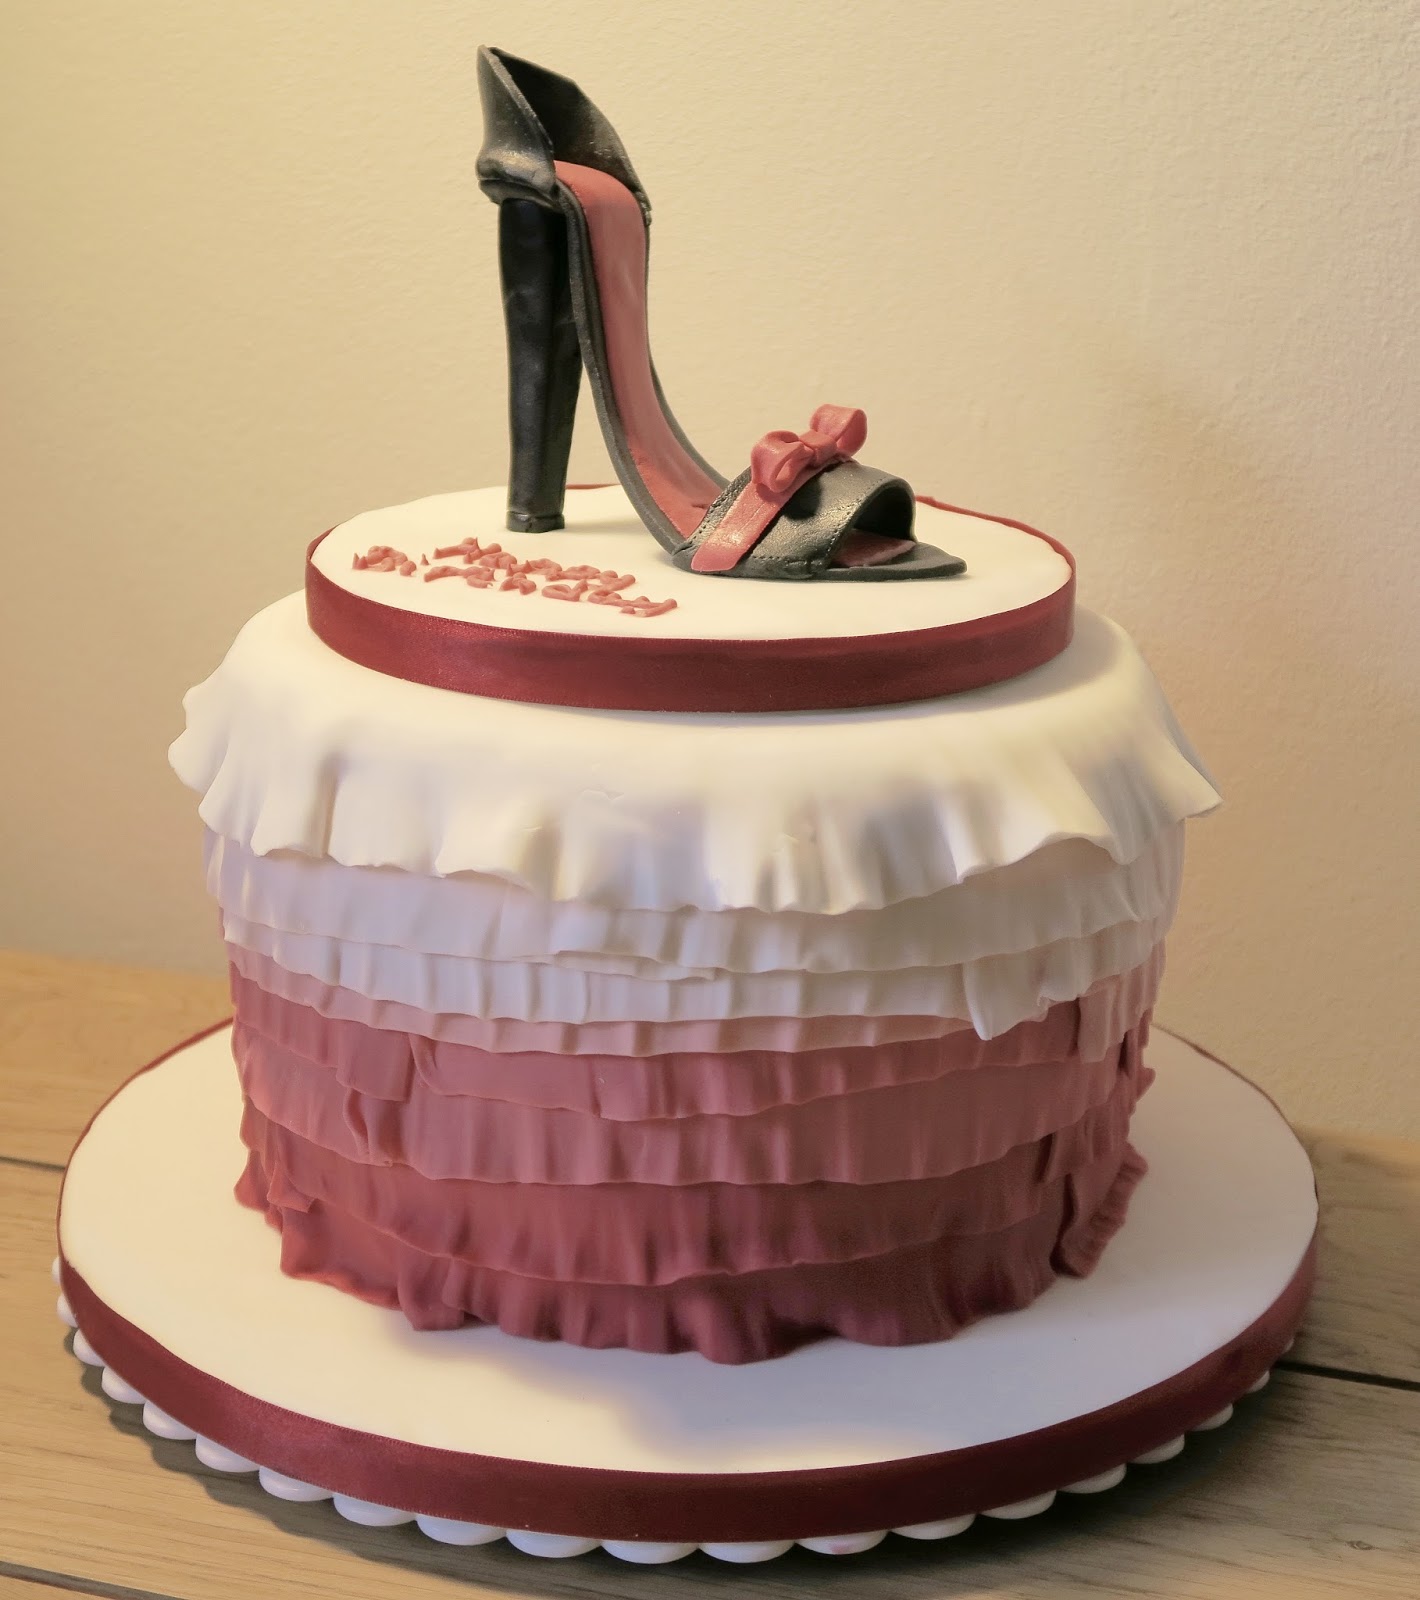 Stiletto high heel cake 4